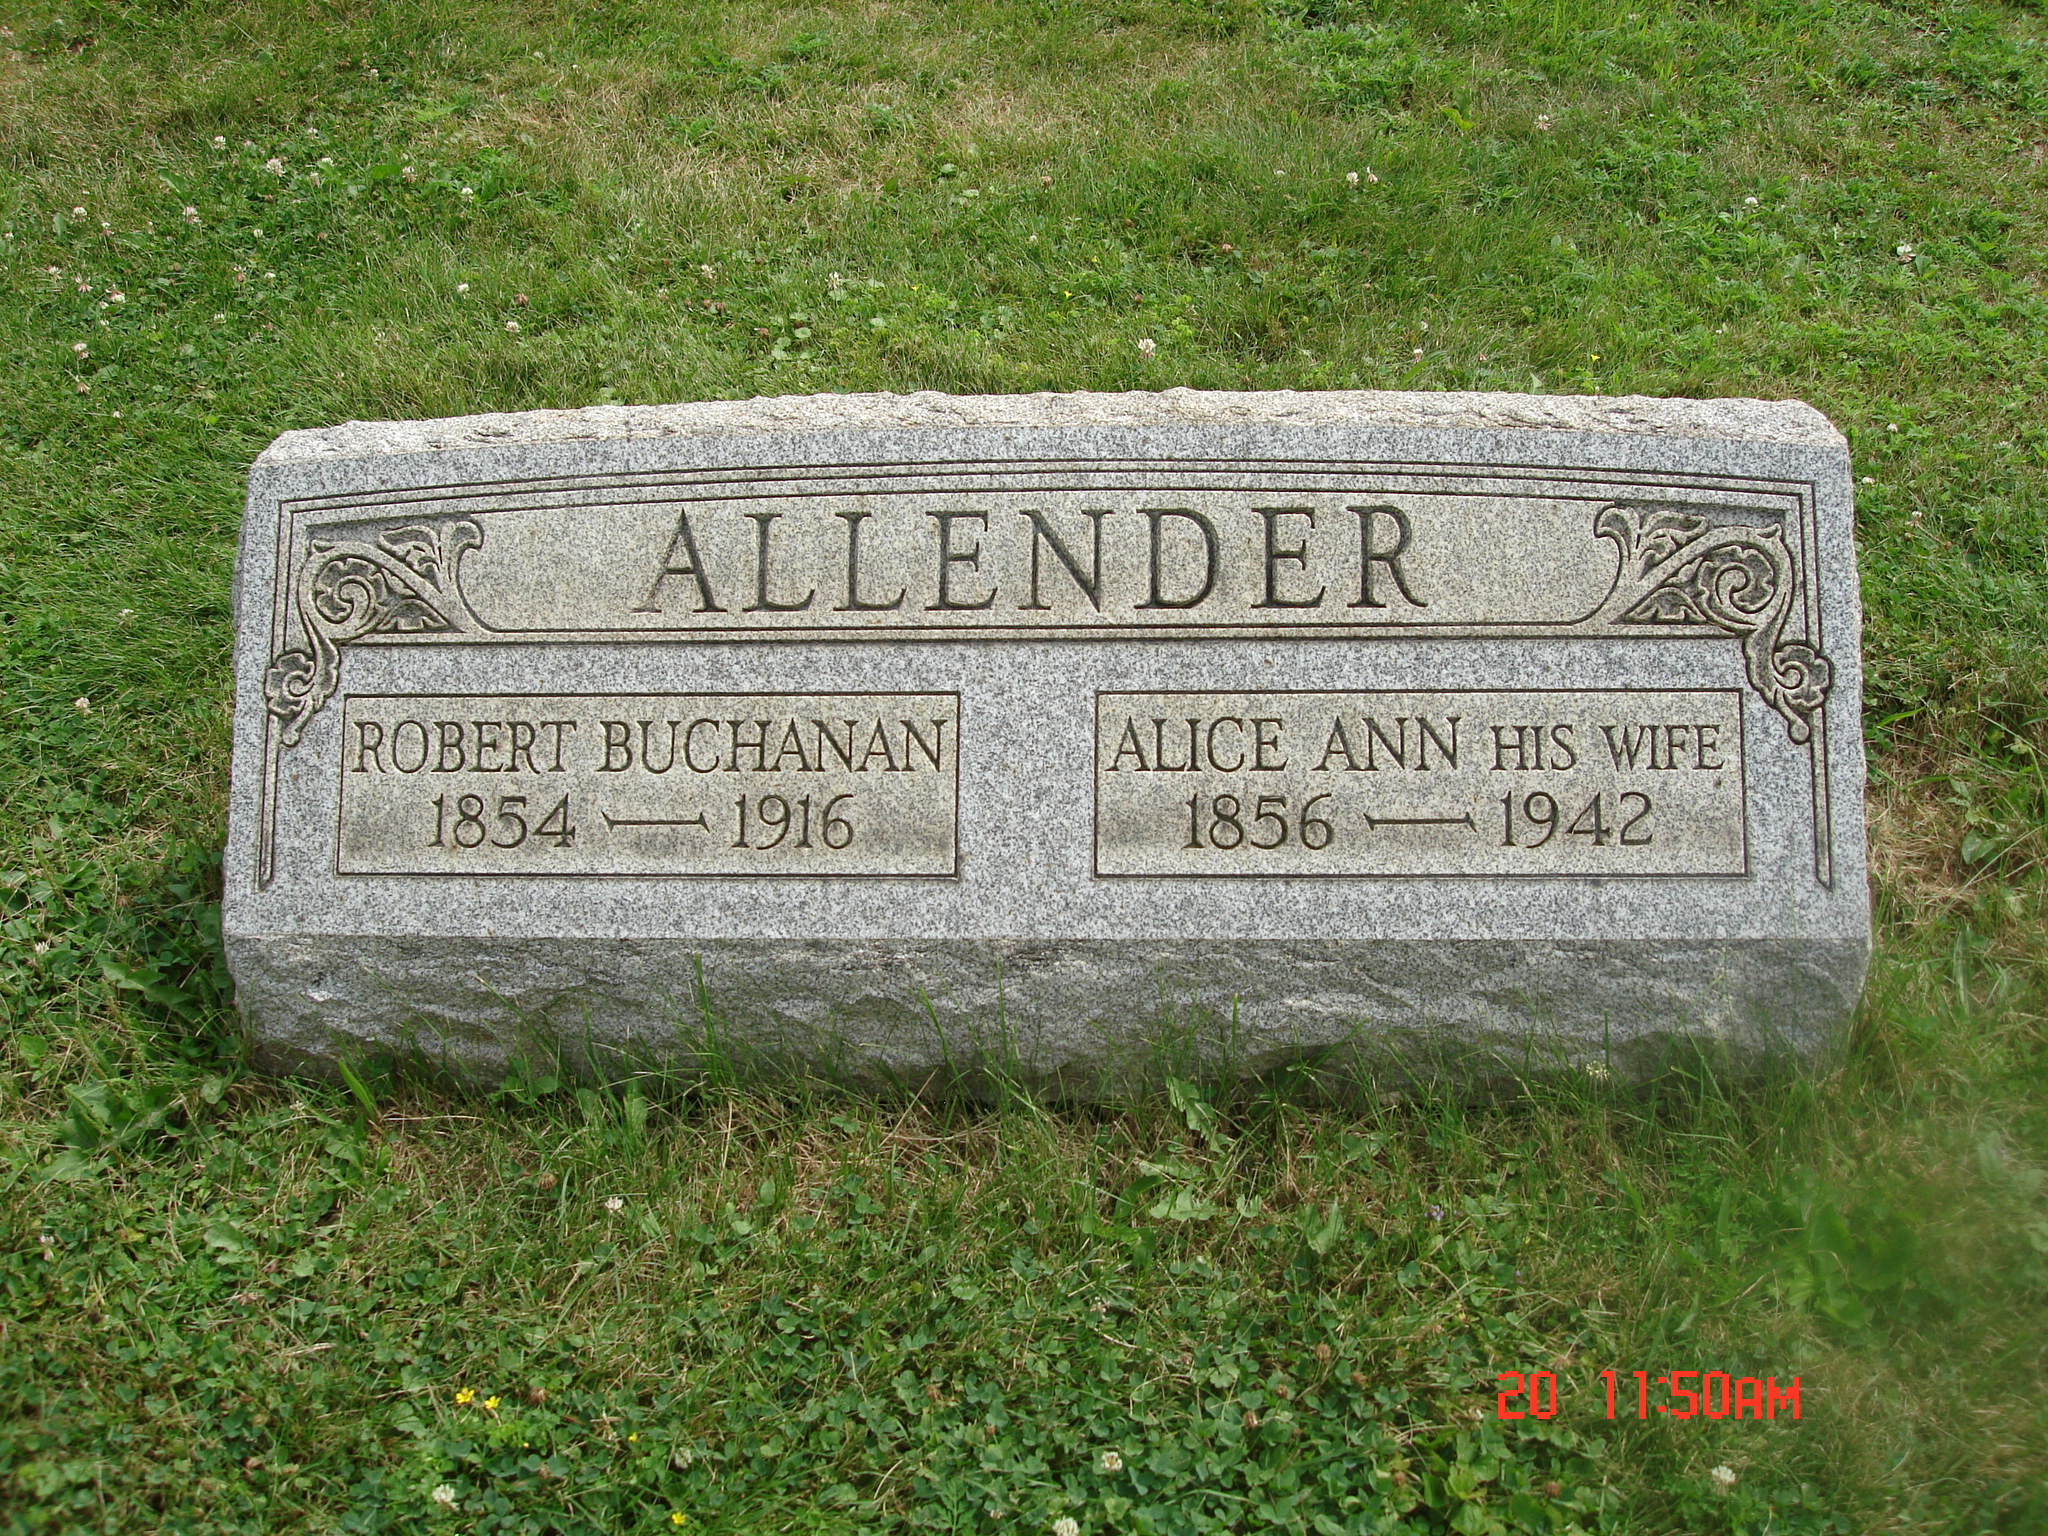 Alice Ann Jackson Allender (1856-1942